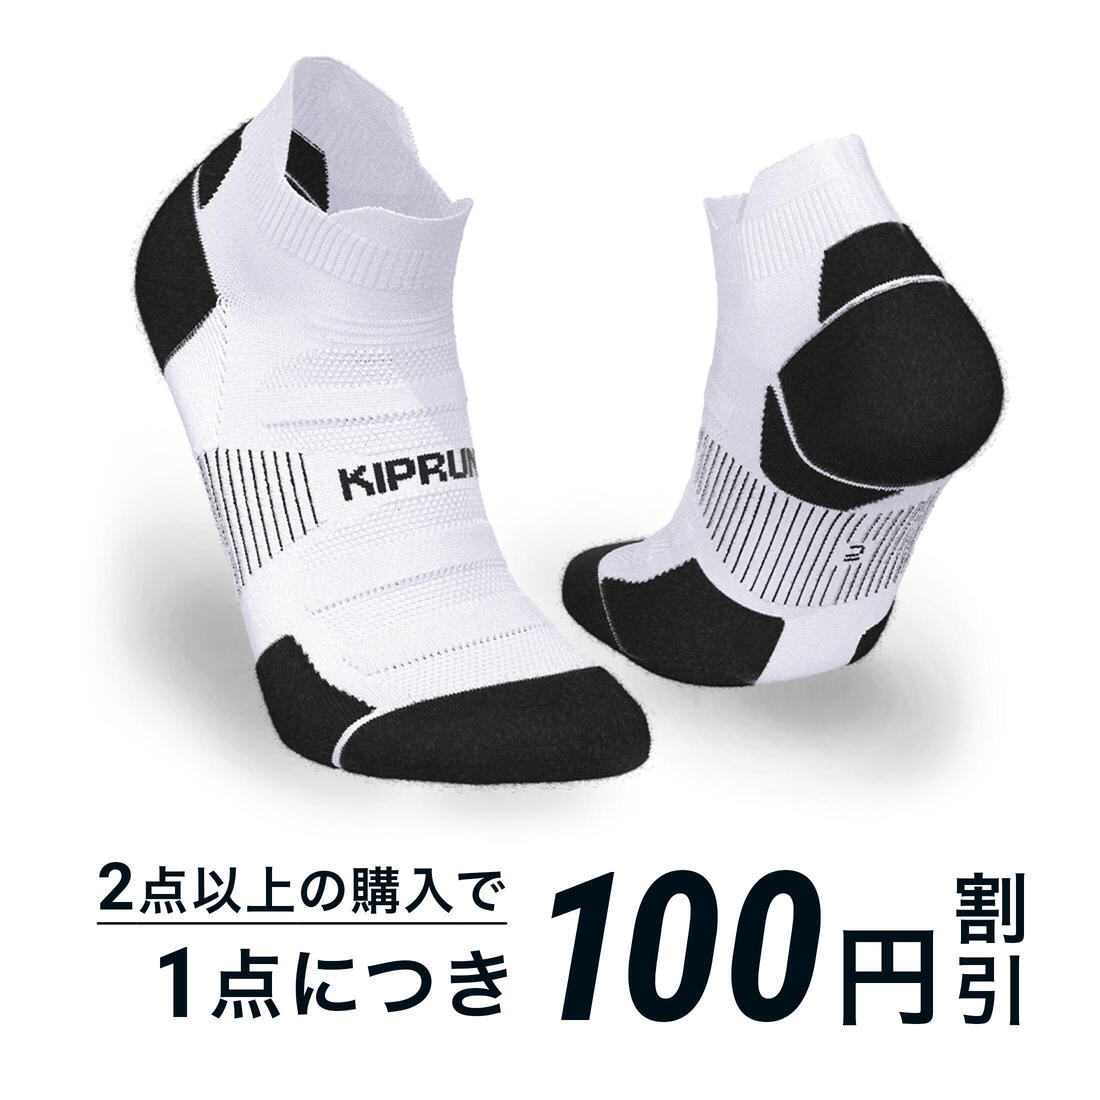 KIPRUN(キプラン)ランニング ソックス INVISIBLE FINE RUN900